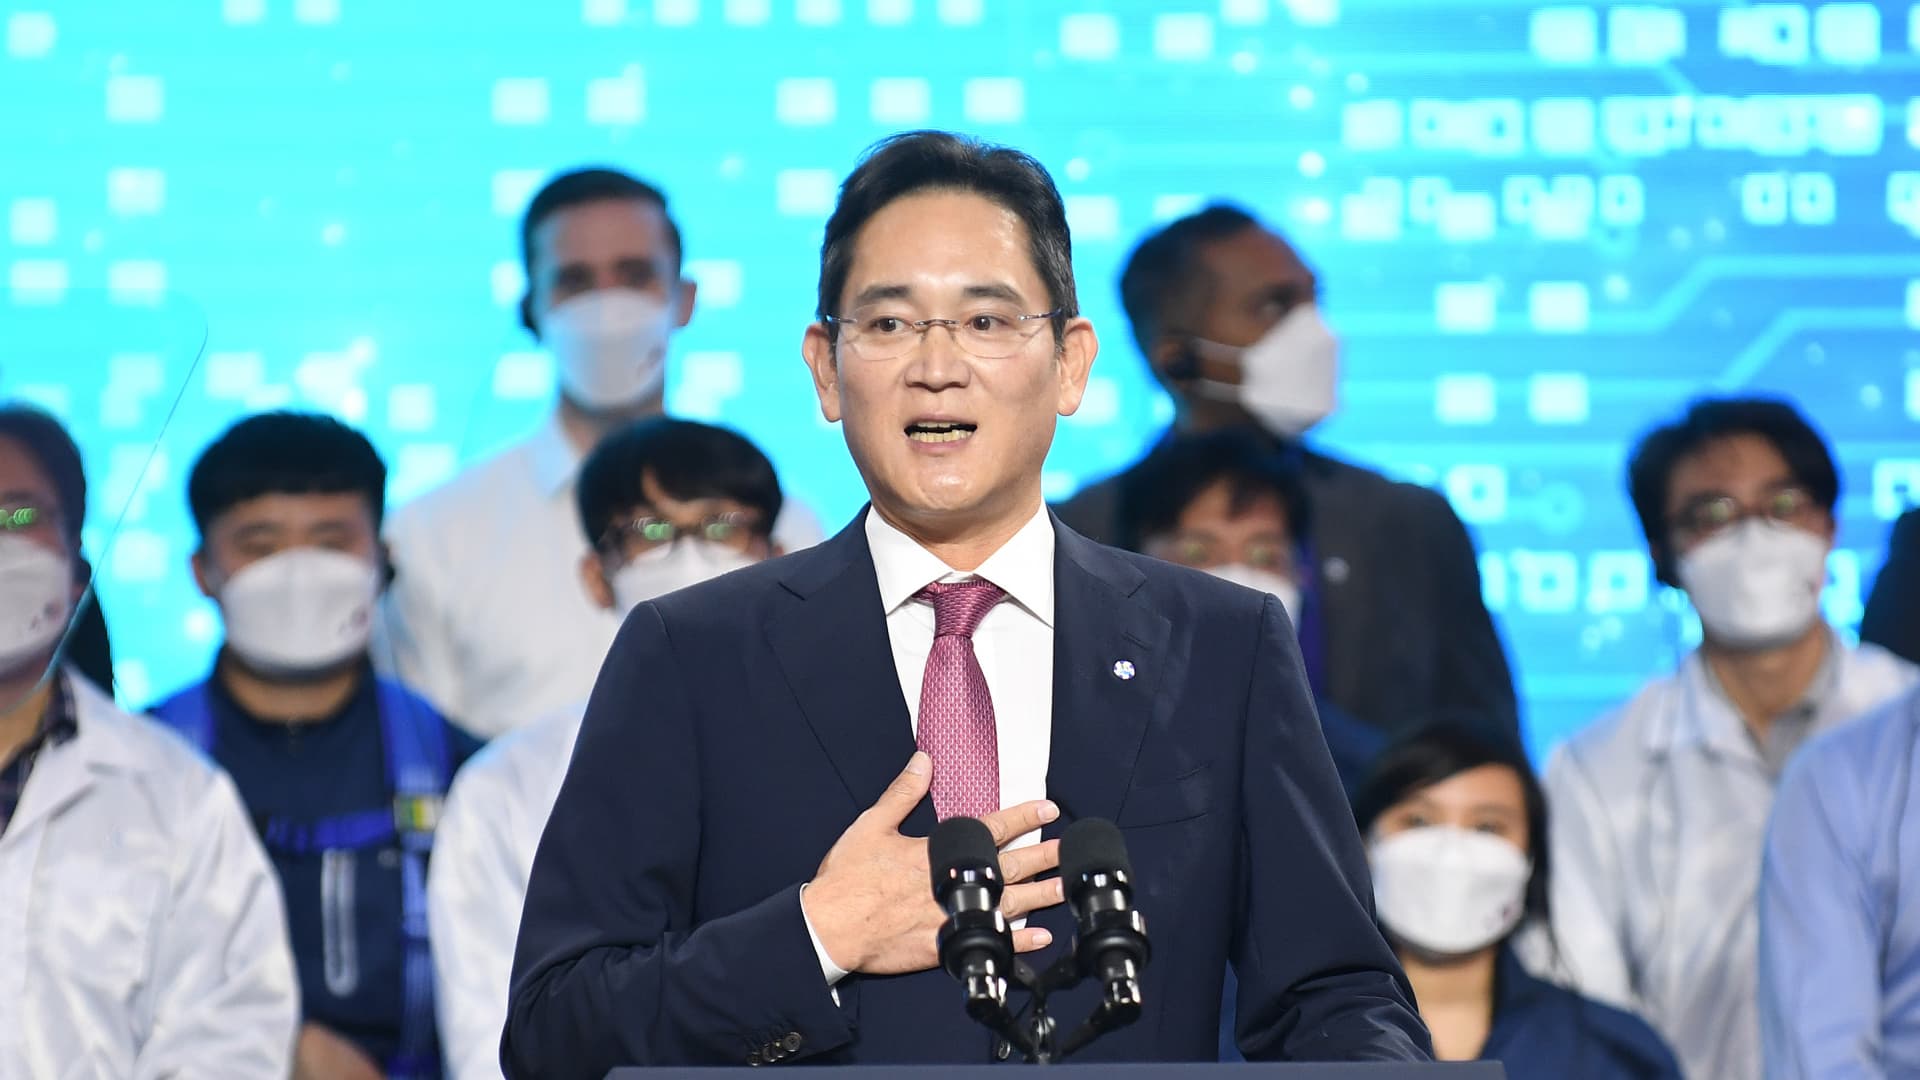 South Korea’s president pardons Samsung leader Jay Y. Lee